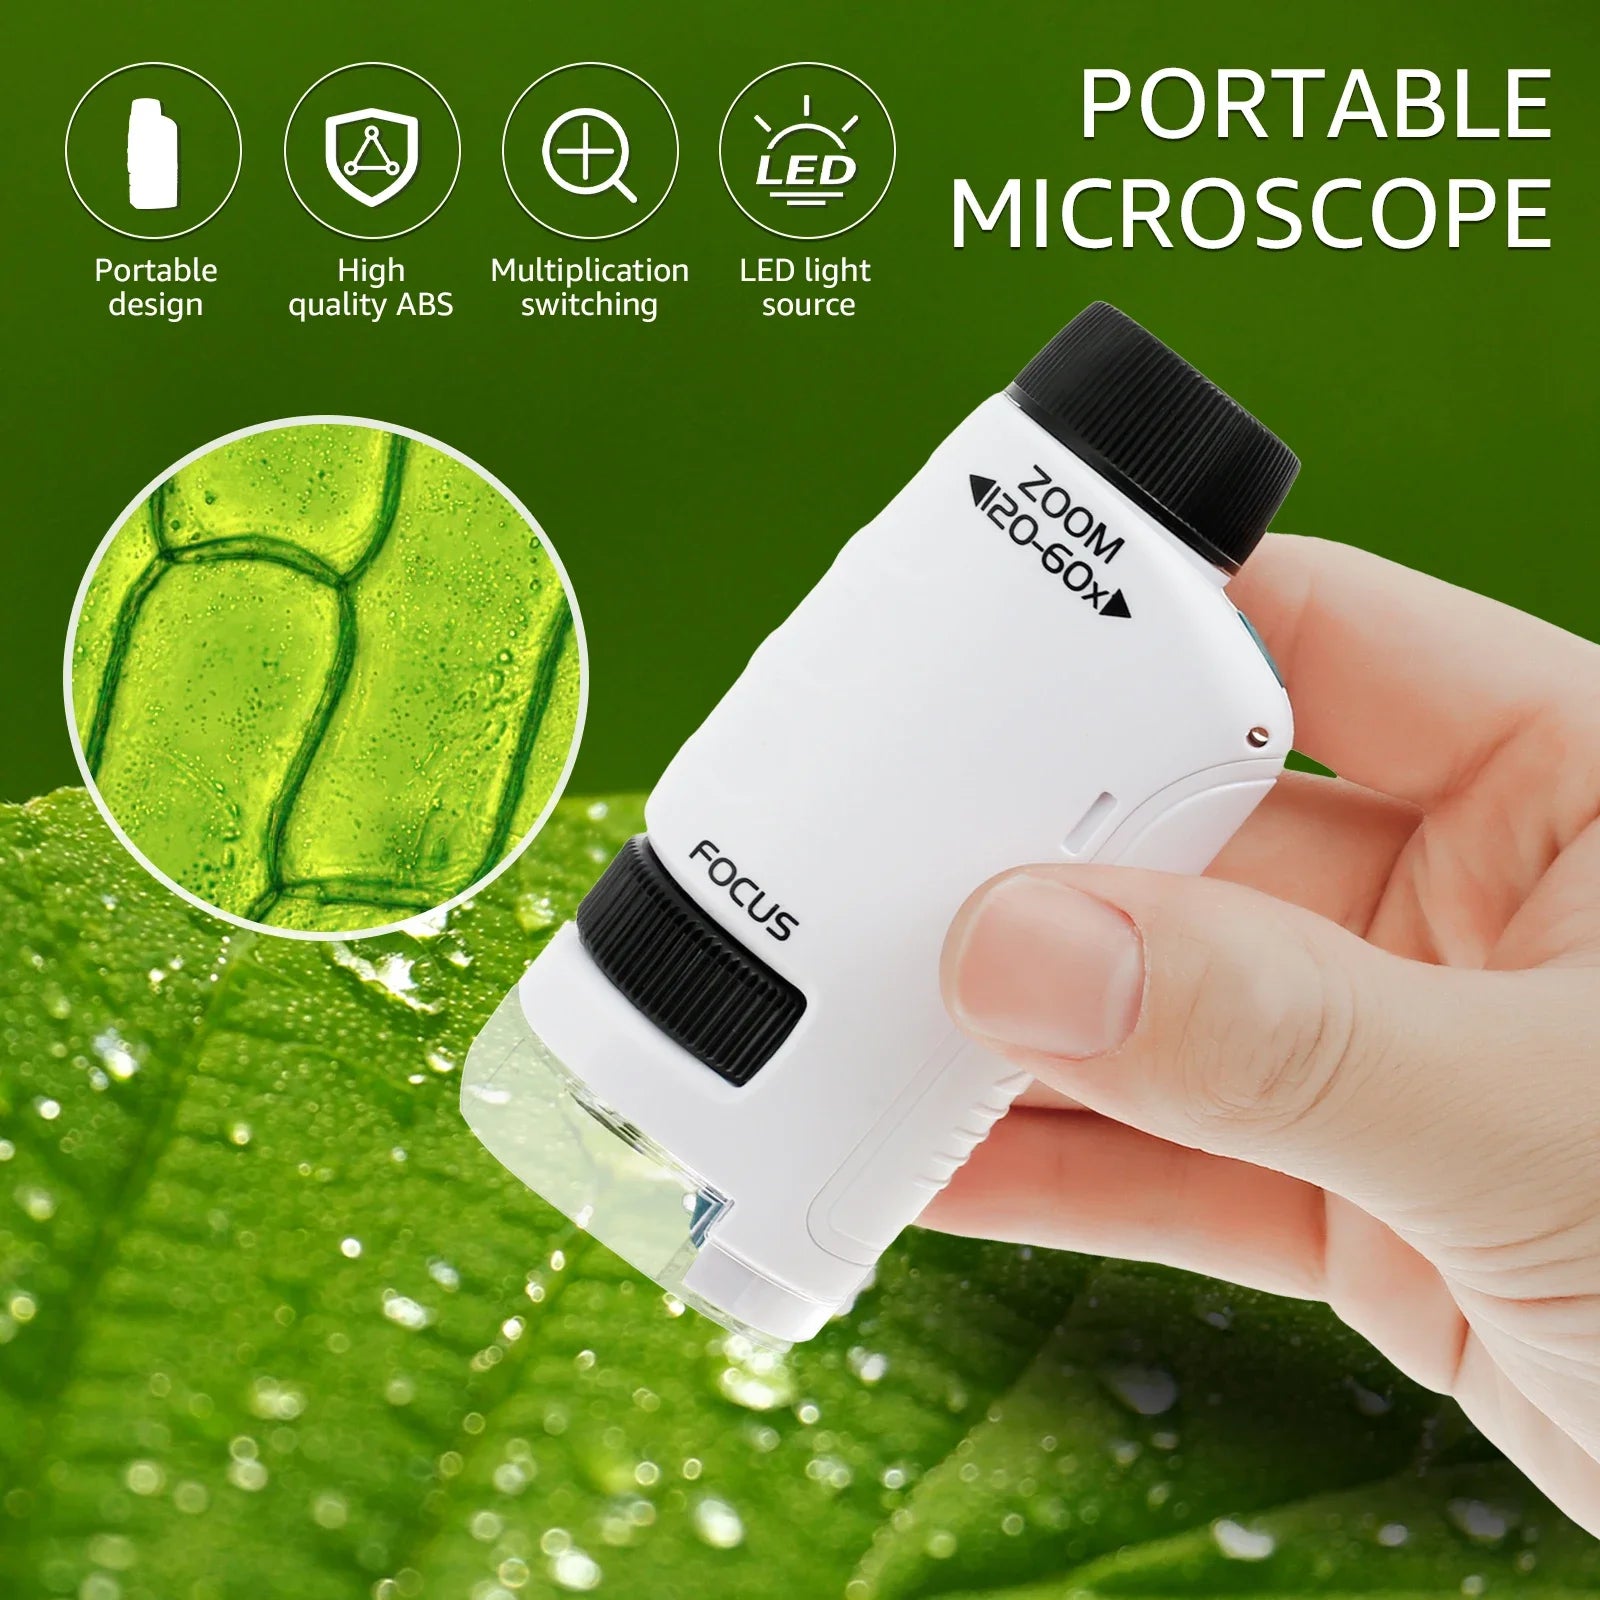 Pocket Microscope Kids Mini Handheld Microscope 60X-120X LED Lighted Portable Microscopes Toy Kids Microscope Learning Education